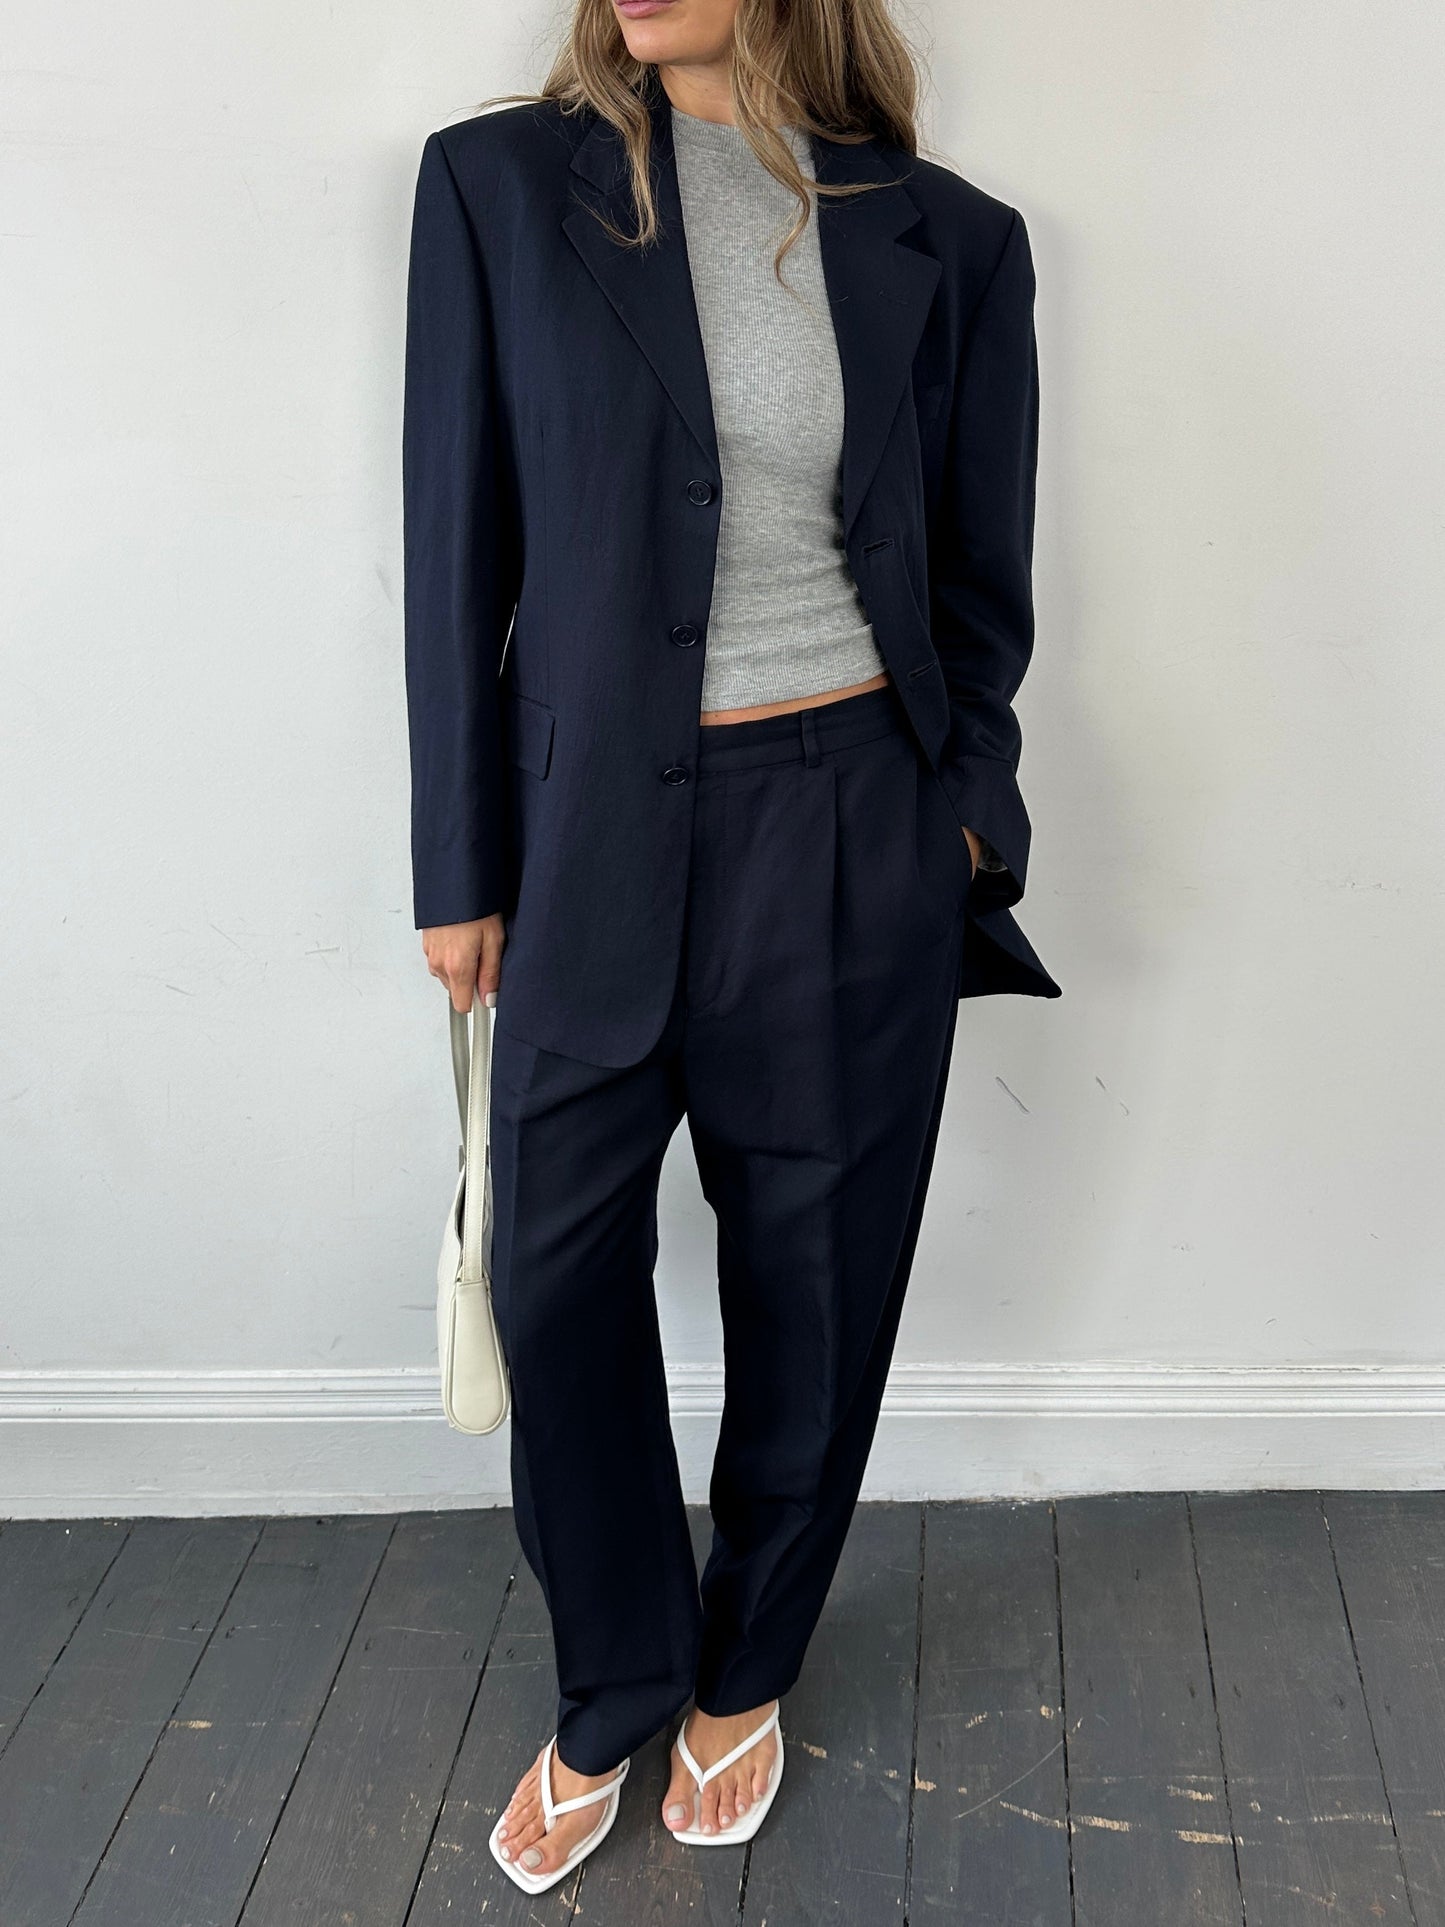 Yves Saint Laurent Linen Silk Single Breasted Suit - 42R/W34